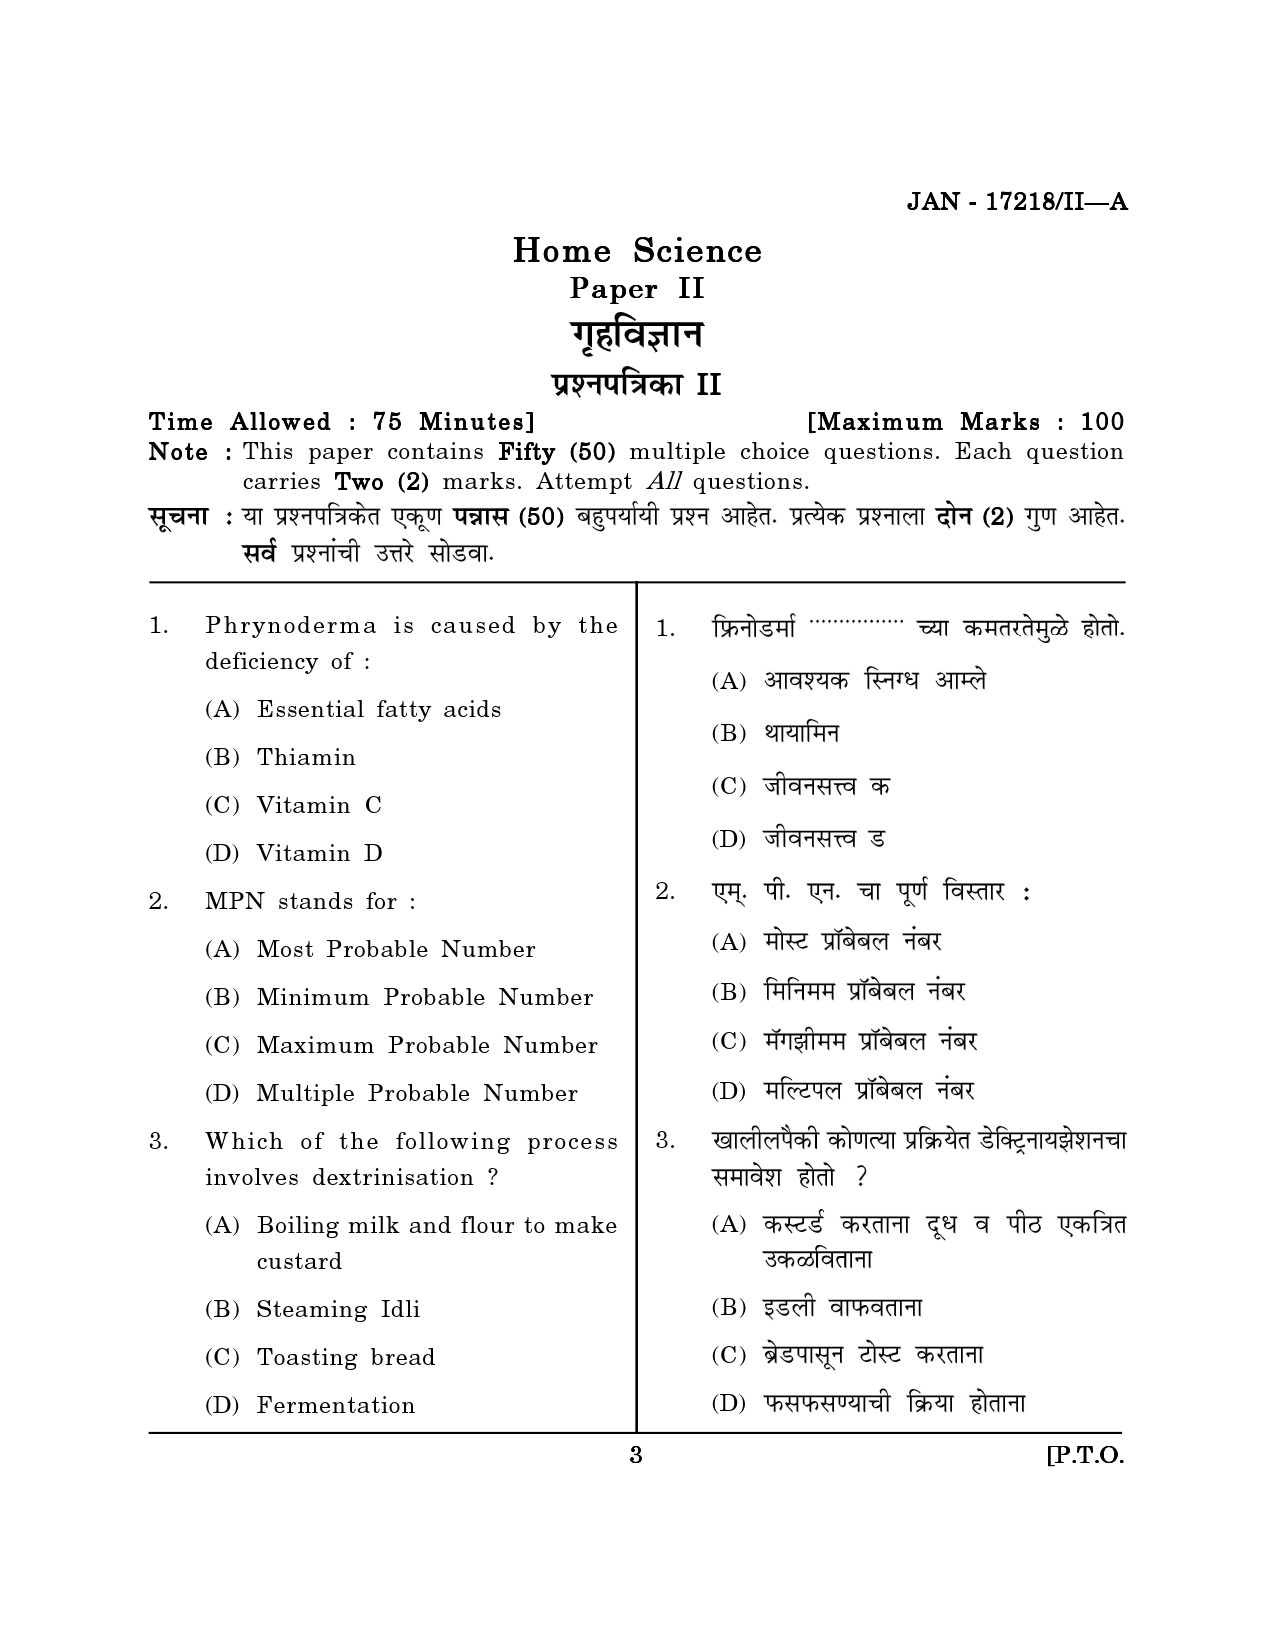 Maharashtra SET Home Science Question Paper II January 2018 2